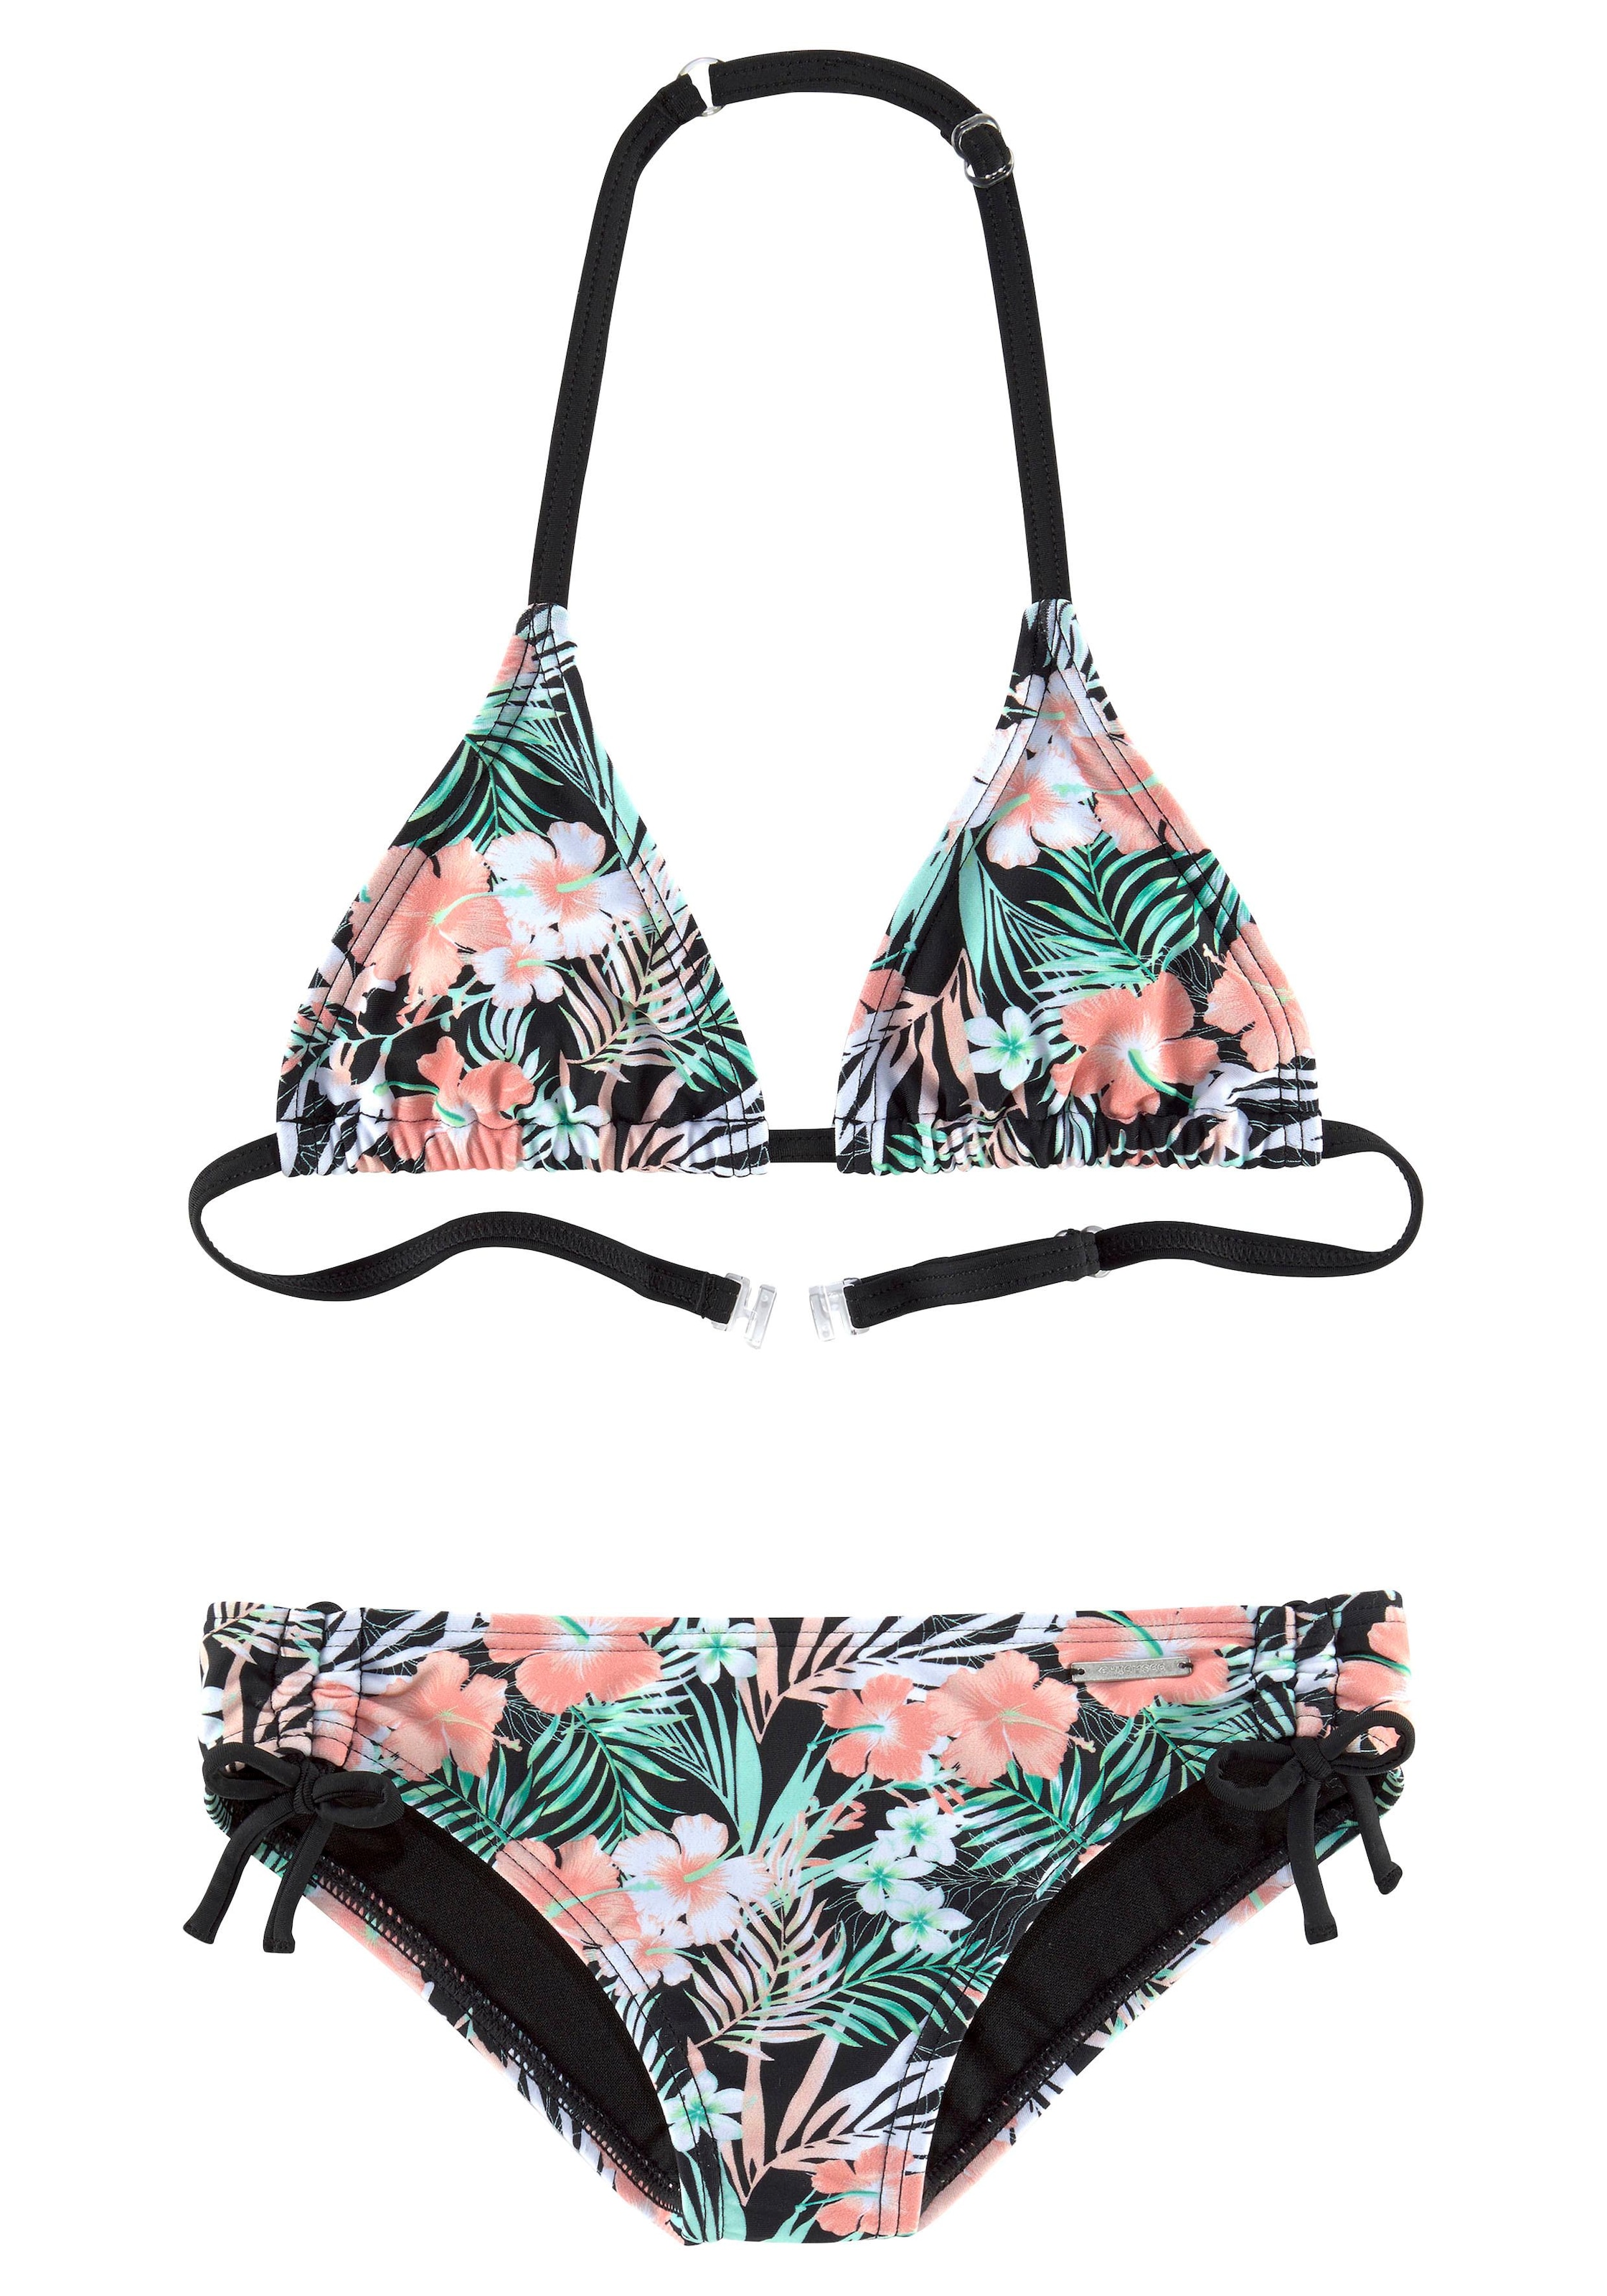 Chiemsee Triangel-Bikini, mit floralem Design